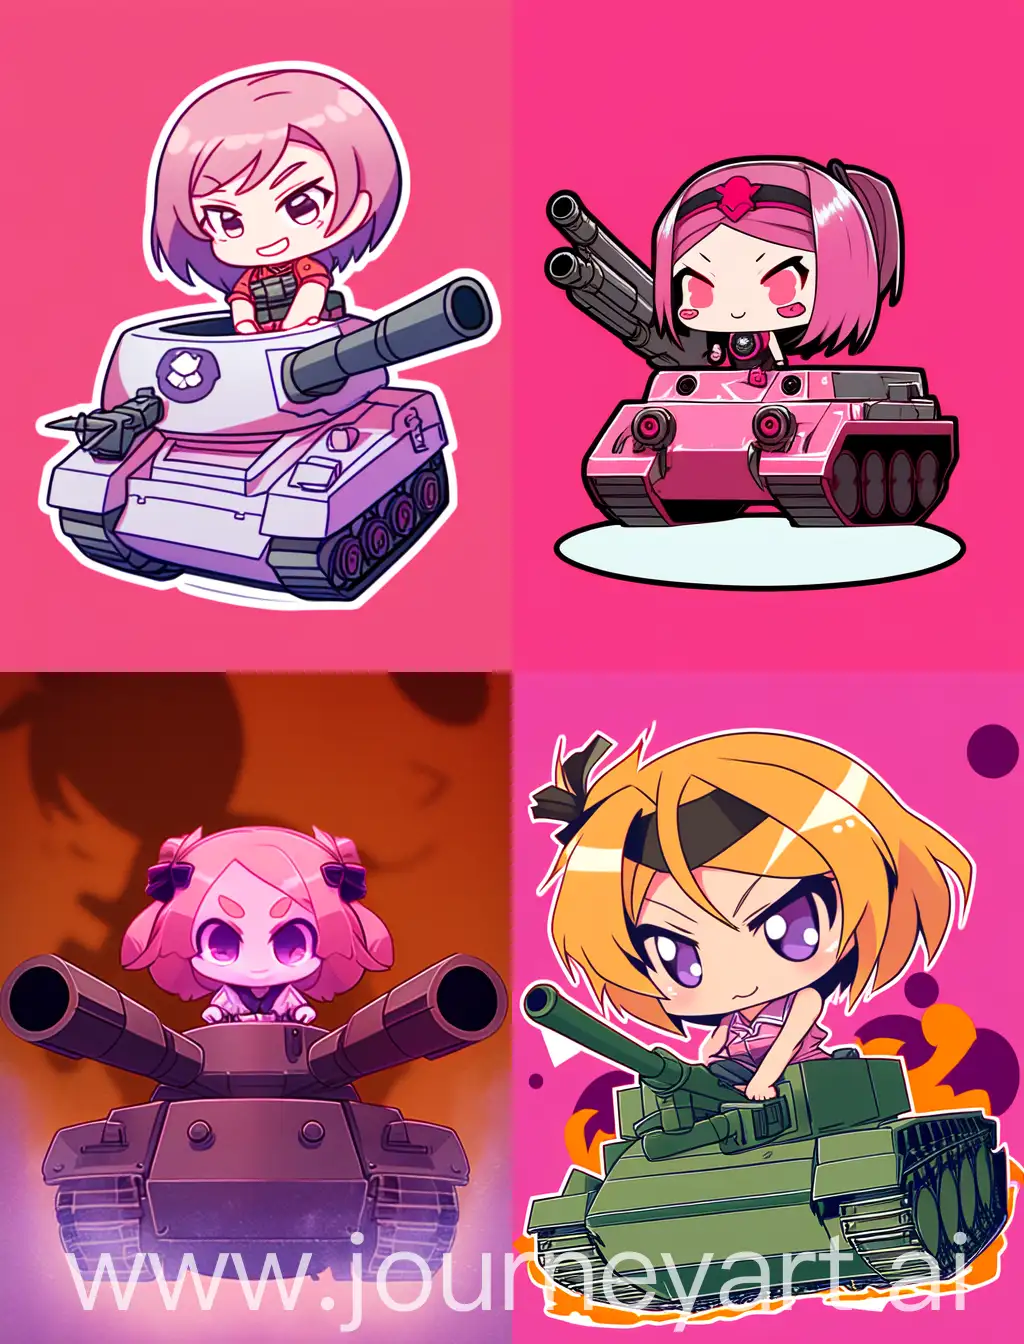 Fierce-Chibi-Anime-Girl-on-Tank-Powerful-Cartoon-Illustration